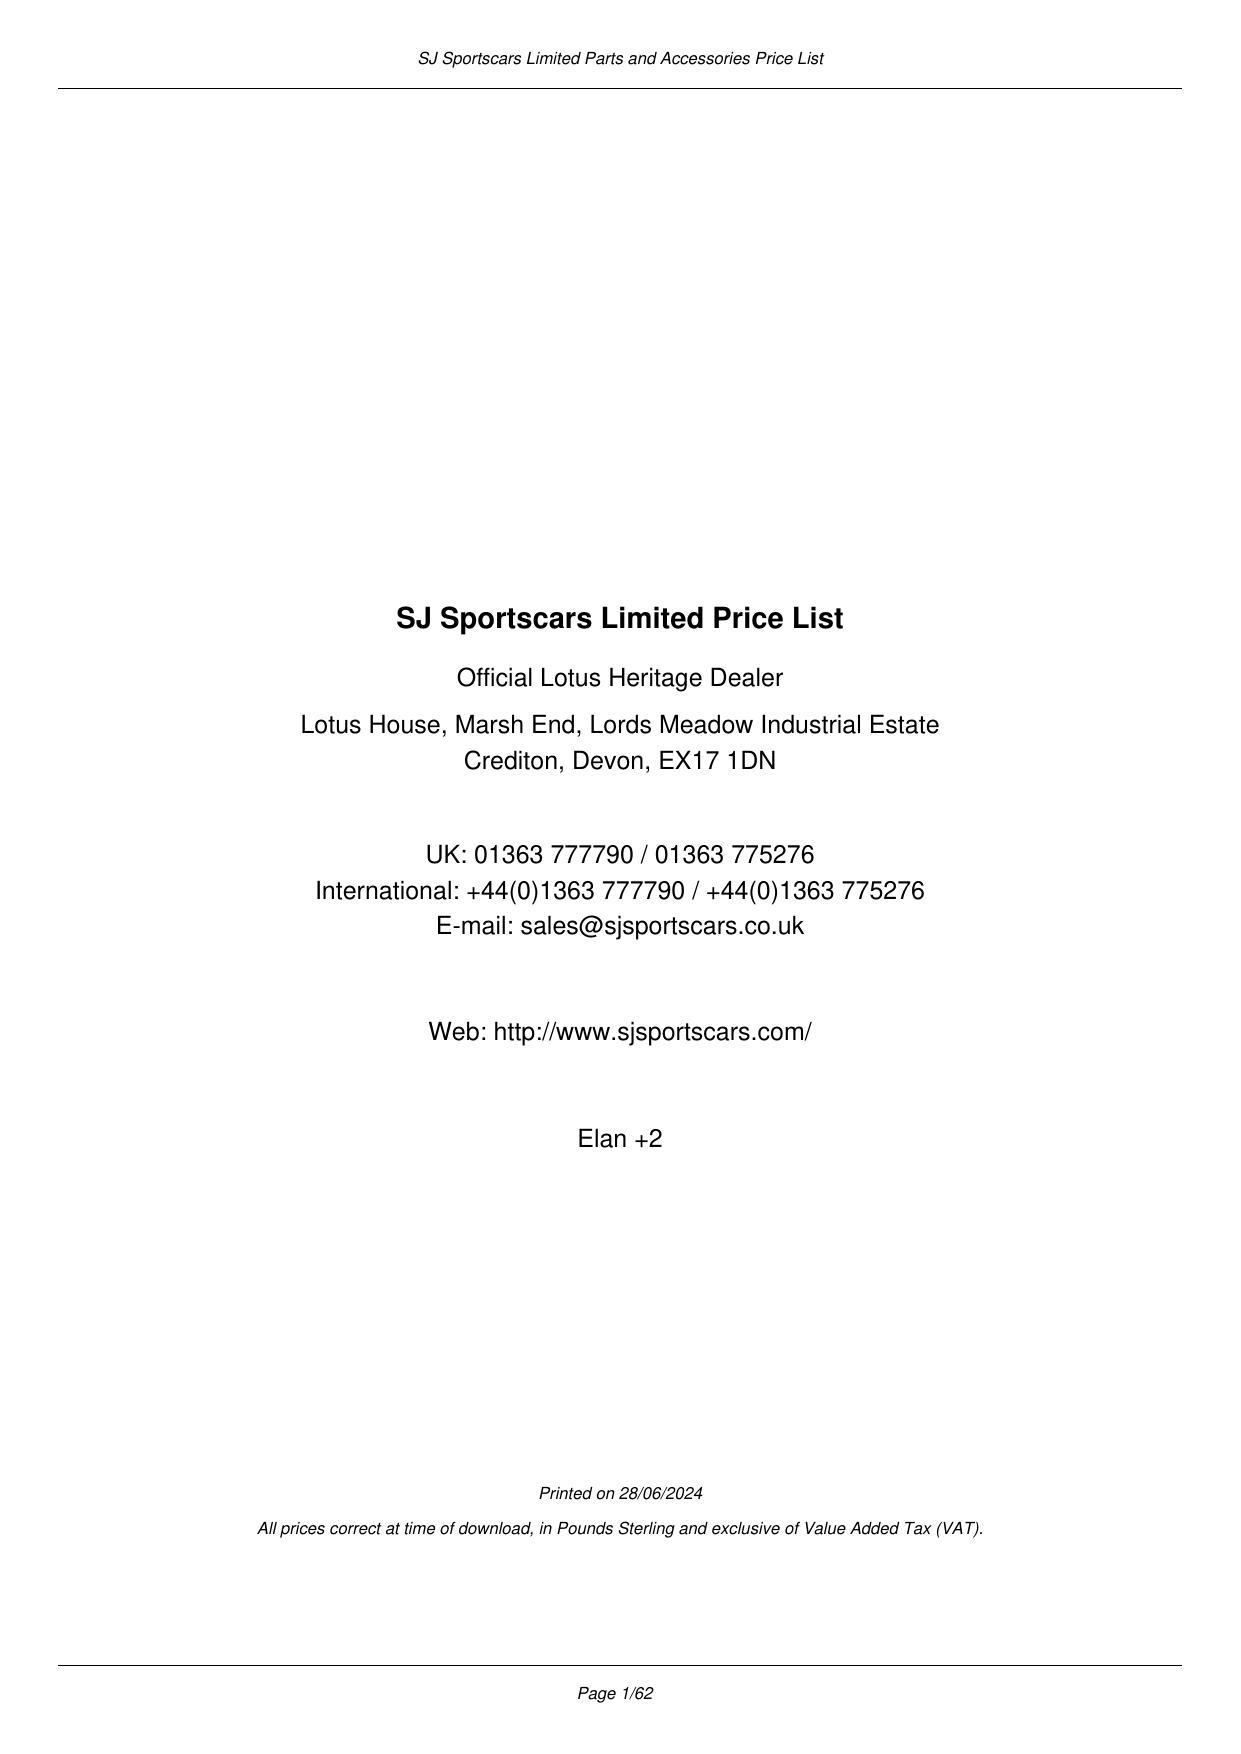 lotus-elan-2-parts-and-accessories-price-list.pdf